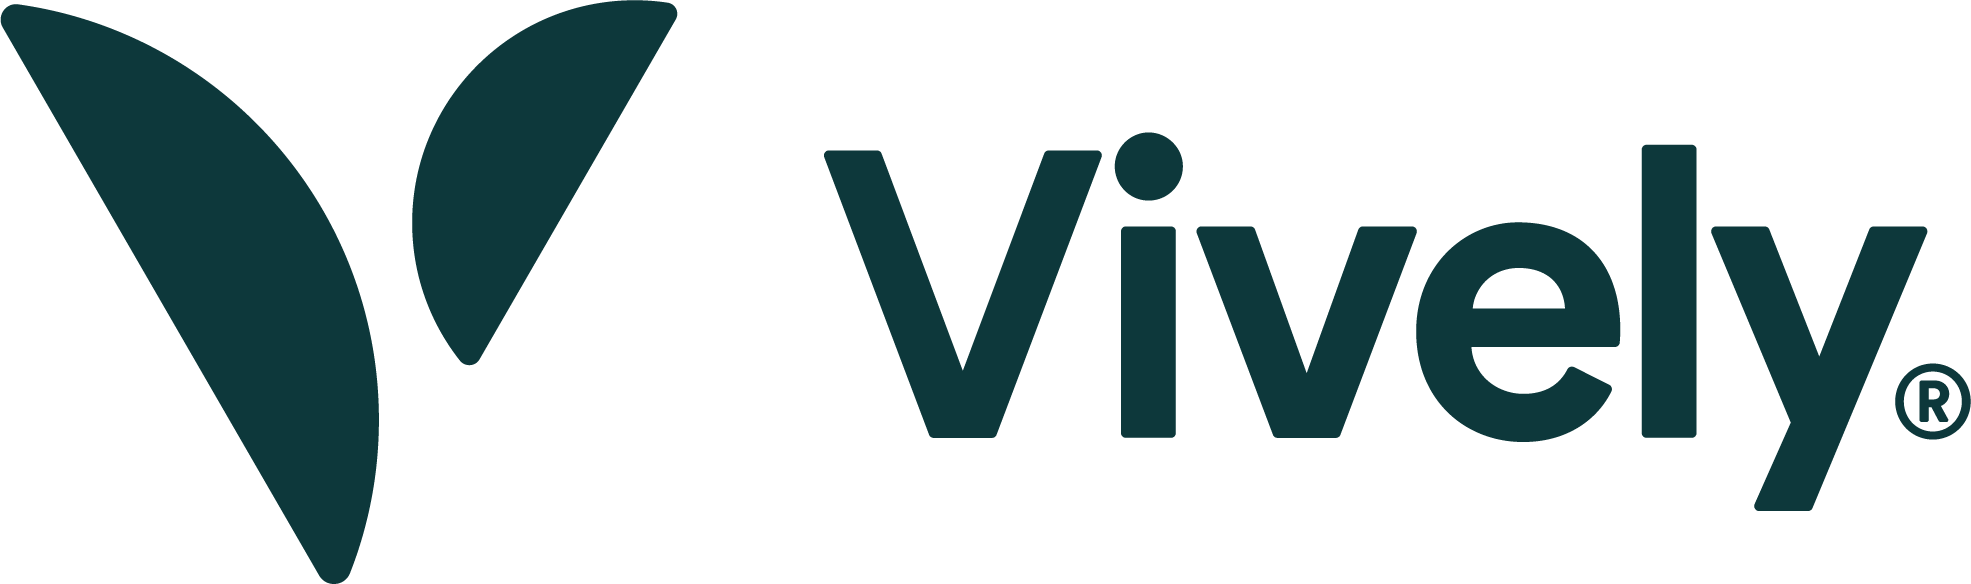 Vively Health logo